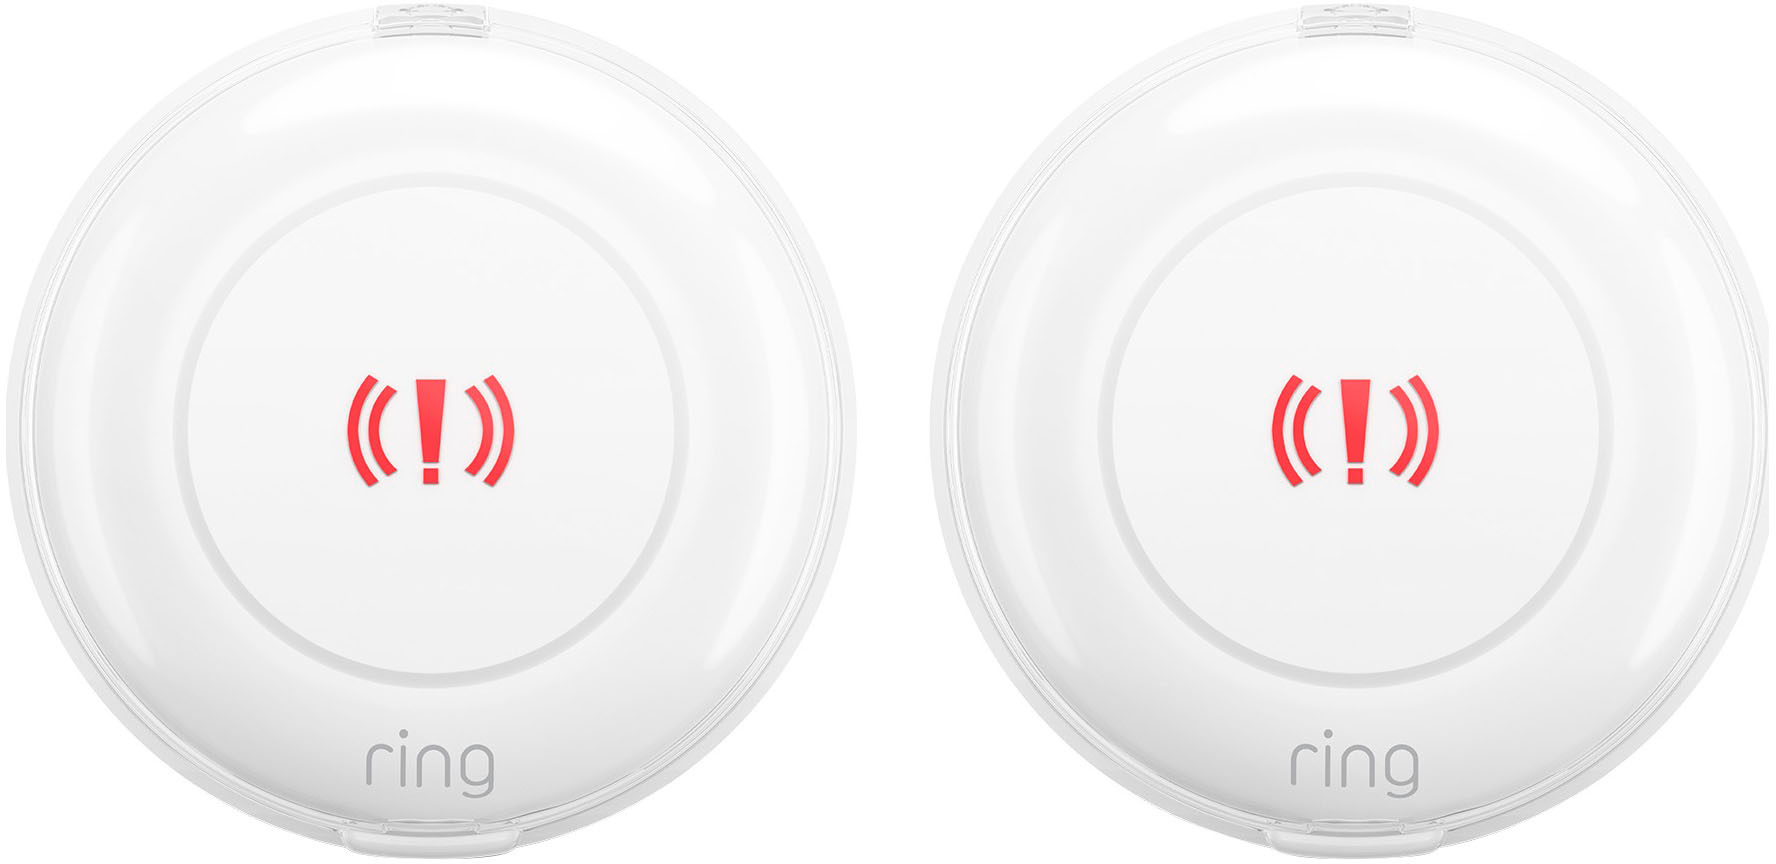 Ring Alarm Panic Button (2nd Gen) White B09NXDQ5YM - Best Buy